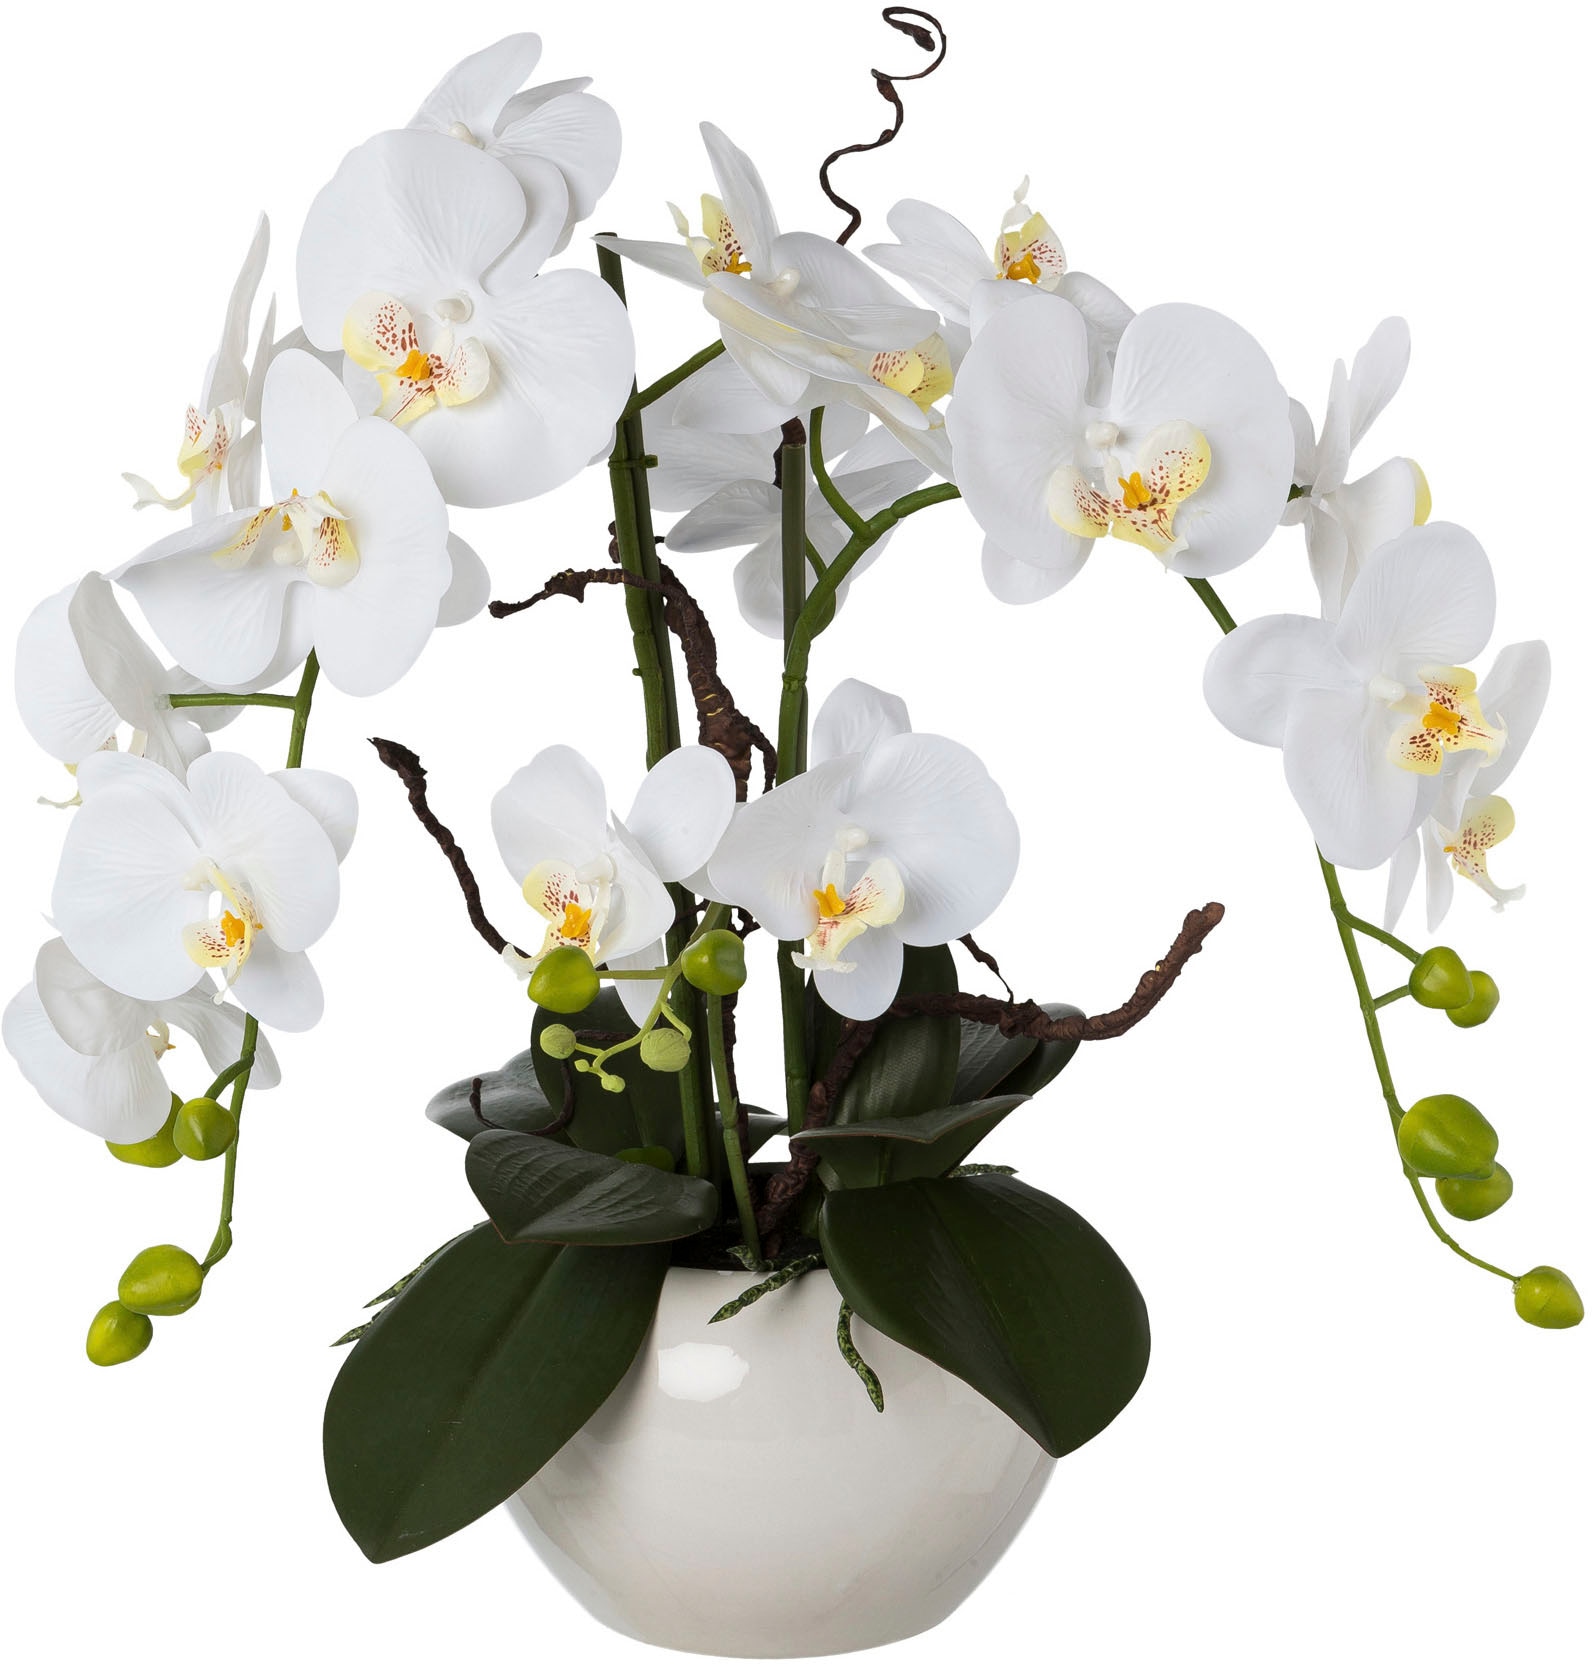 aus (1 Keramik bei I.GE.A. OTTO Antik-Schale Kunstblume »Orchidee«, in St.),